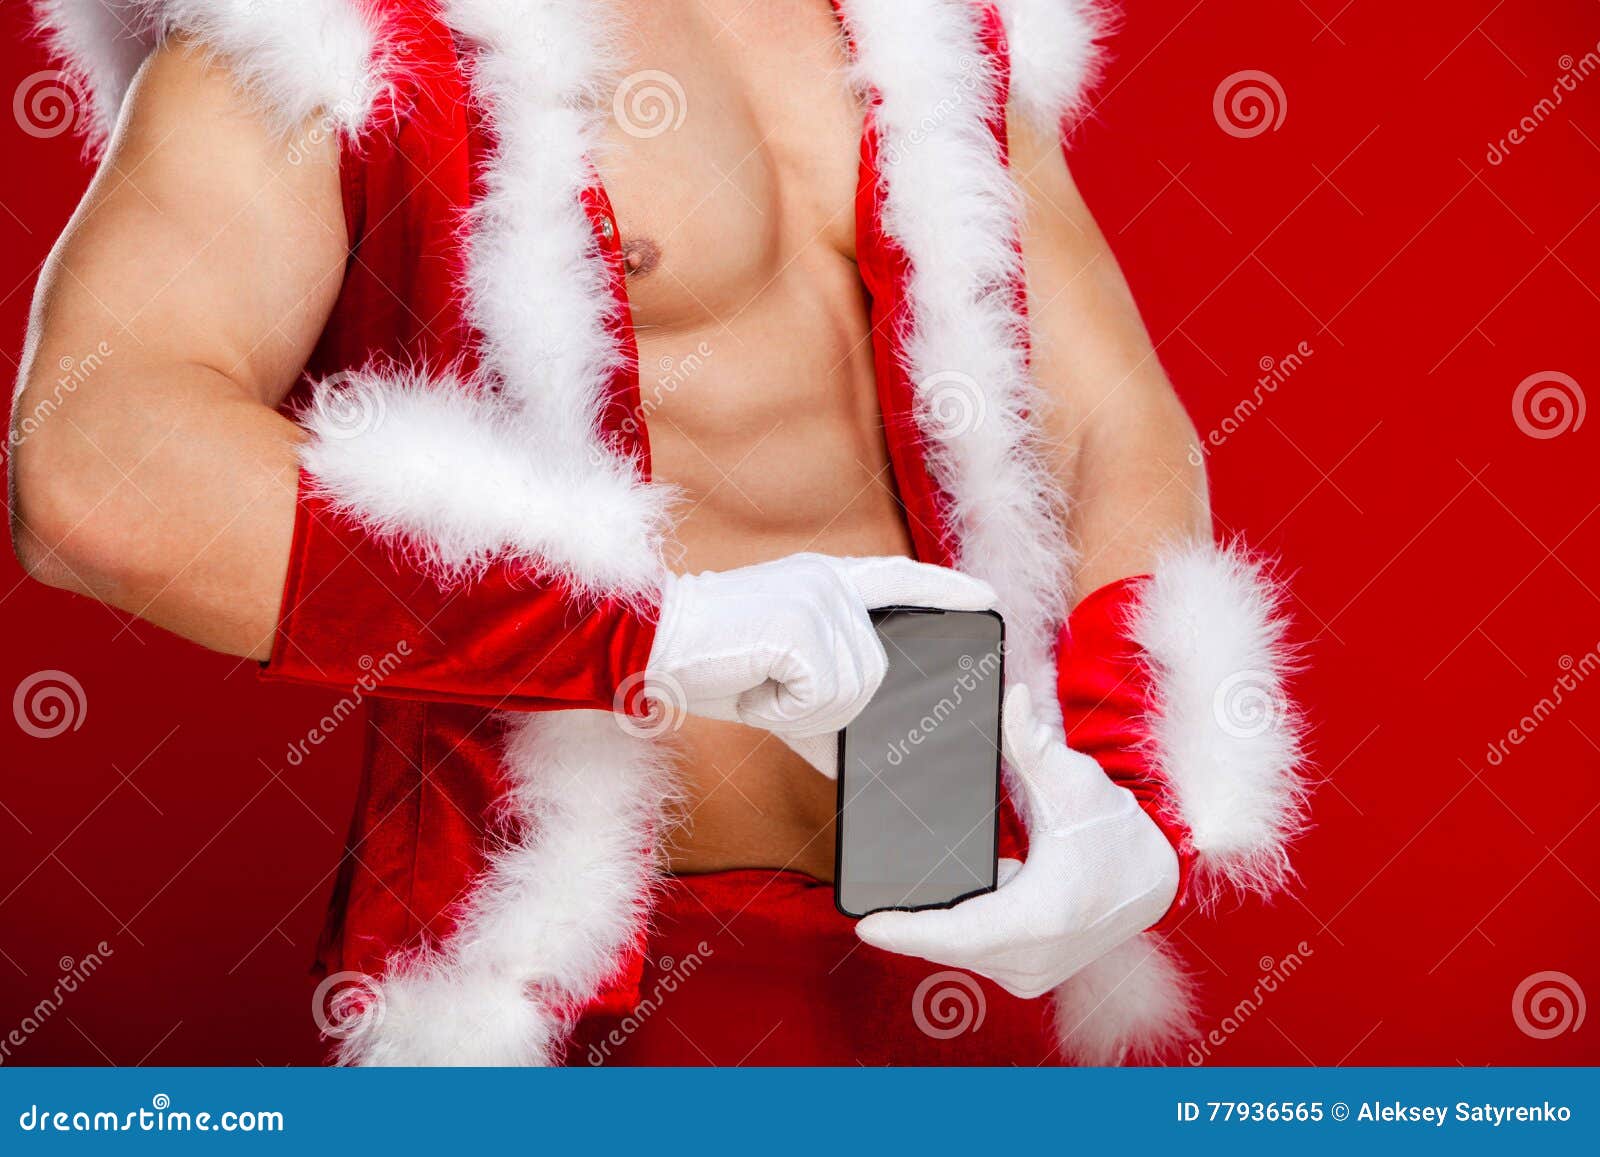 Santa Claus Shows Poradok Surprise Phone Stock Image Image Of Adult